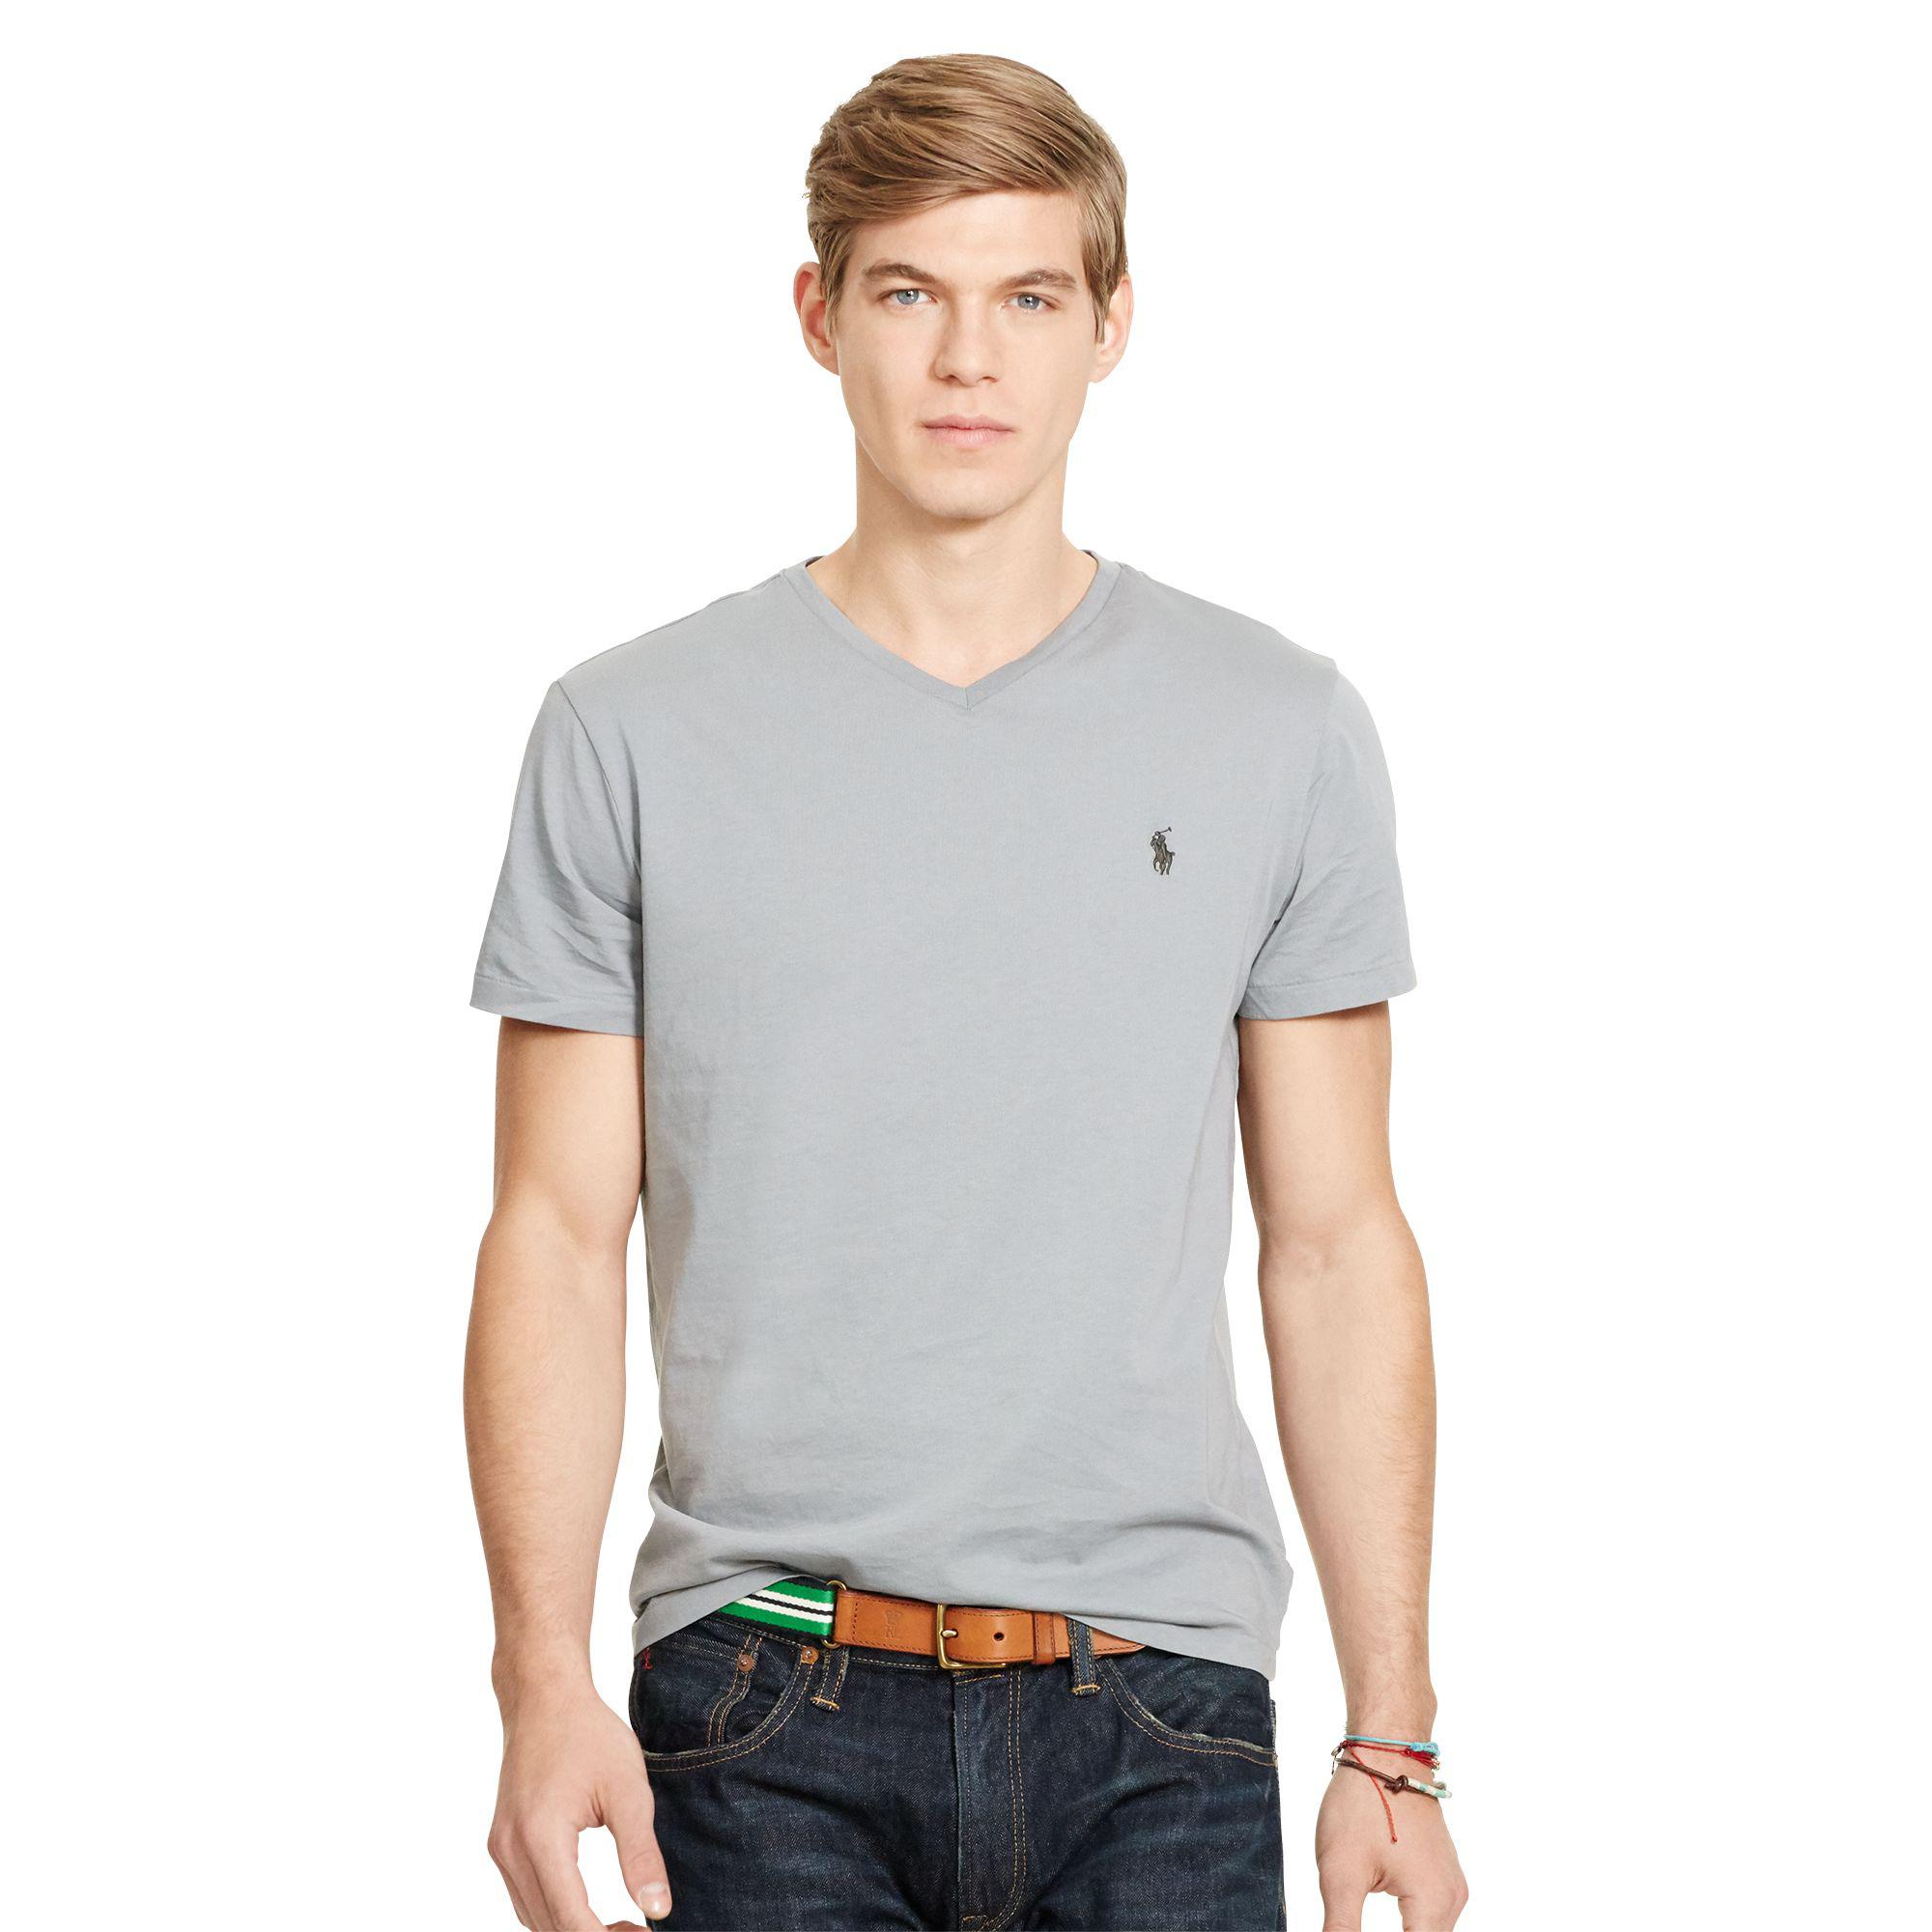 Polo Ralph Lauren Cotton Jersey V-neck T-shirt in Gray for Men - Lyst